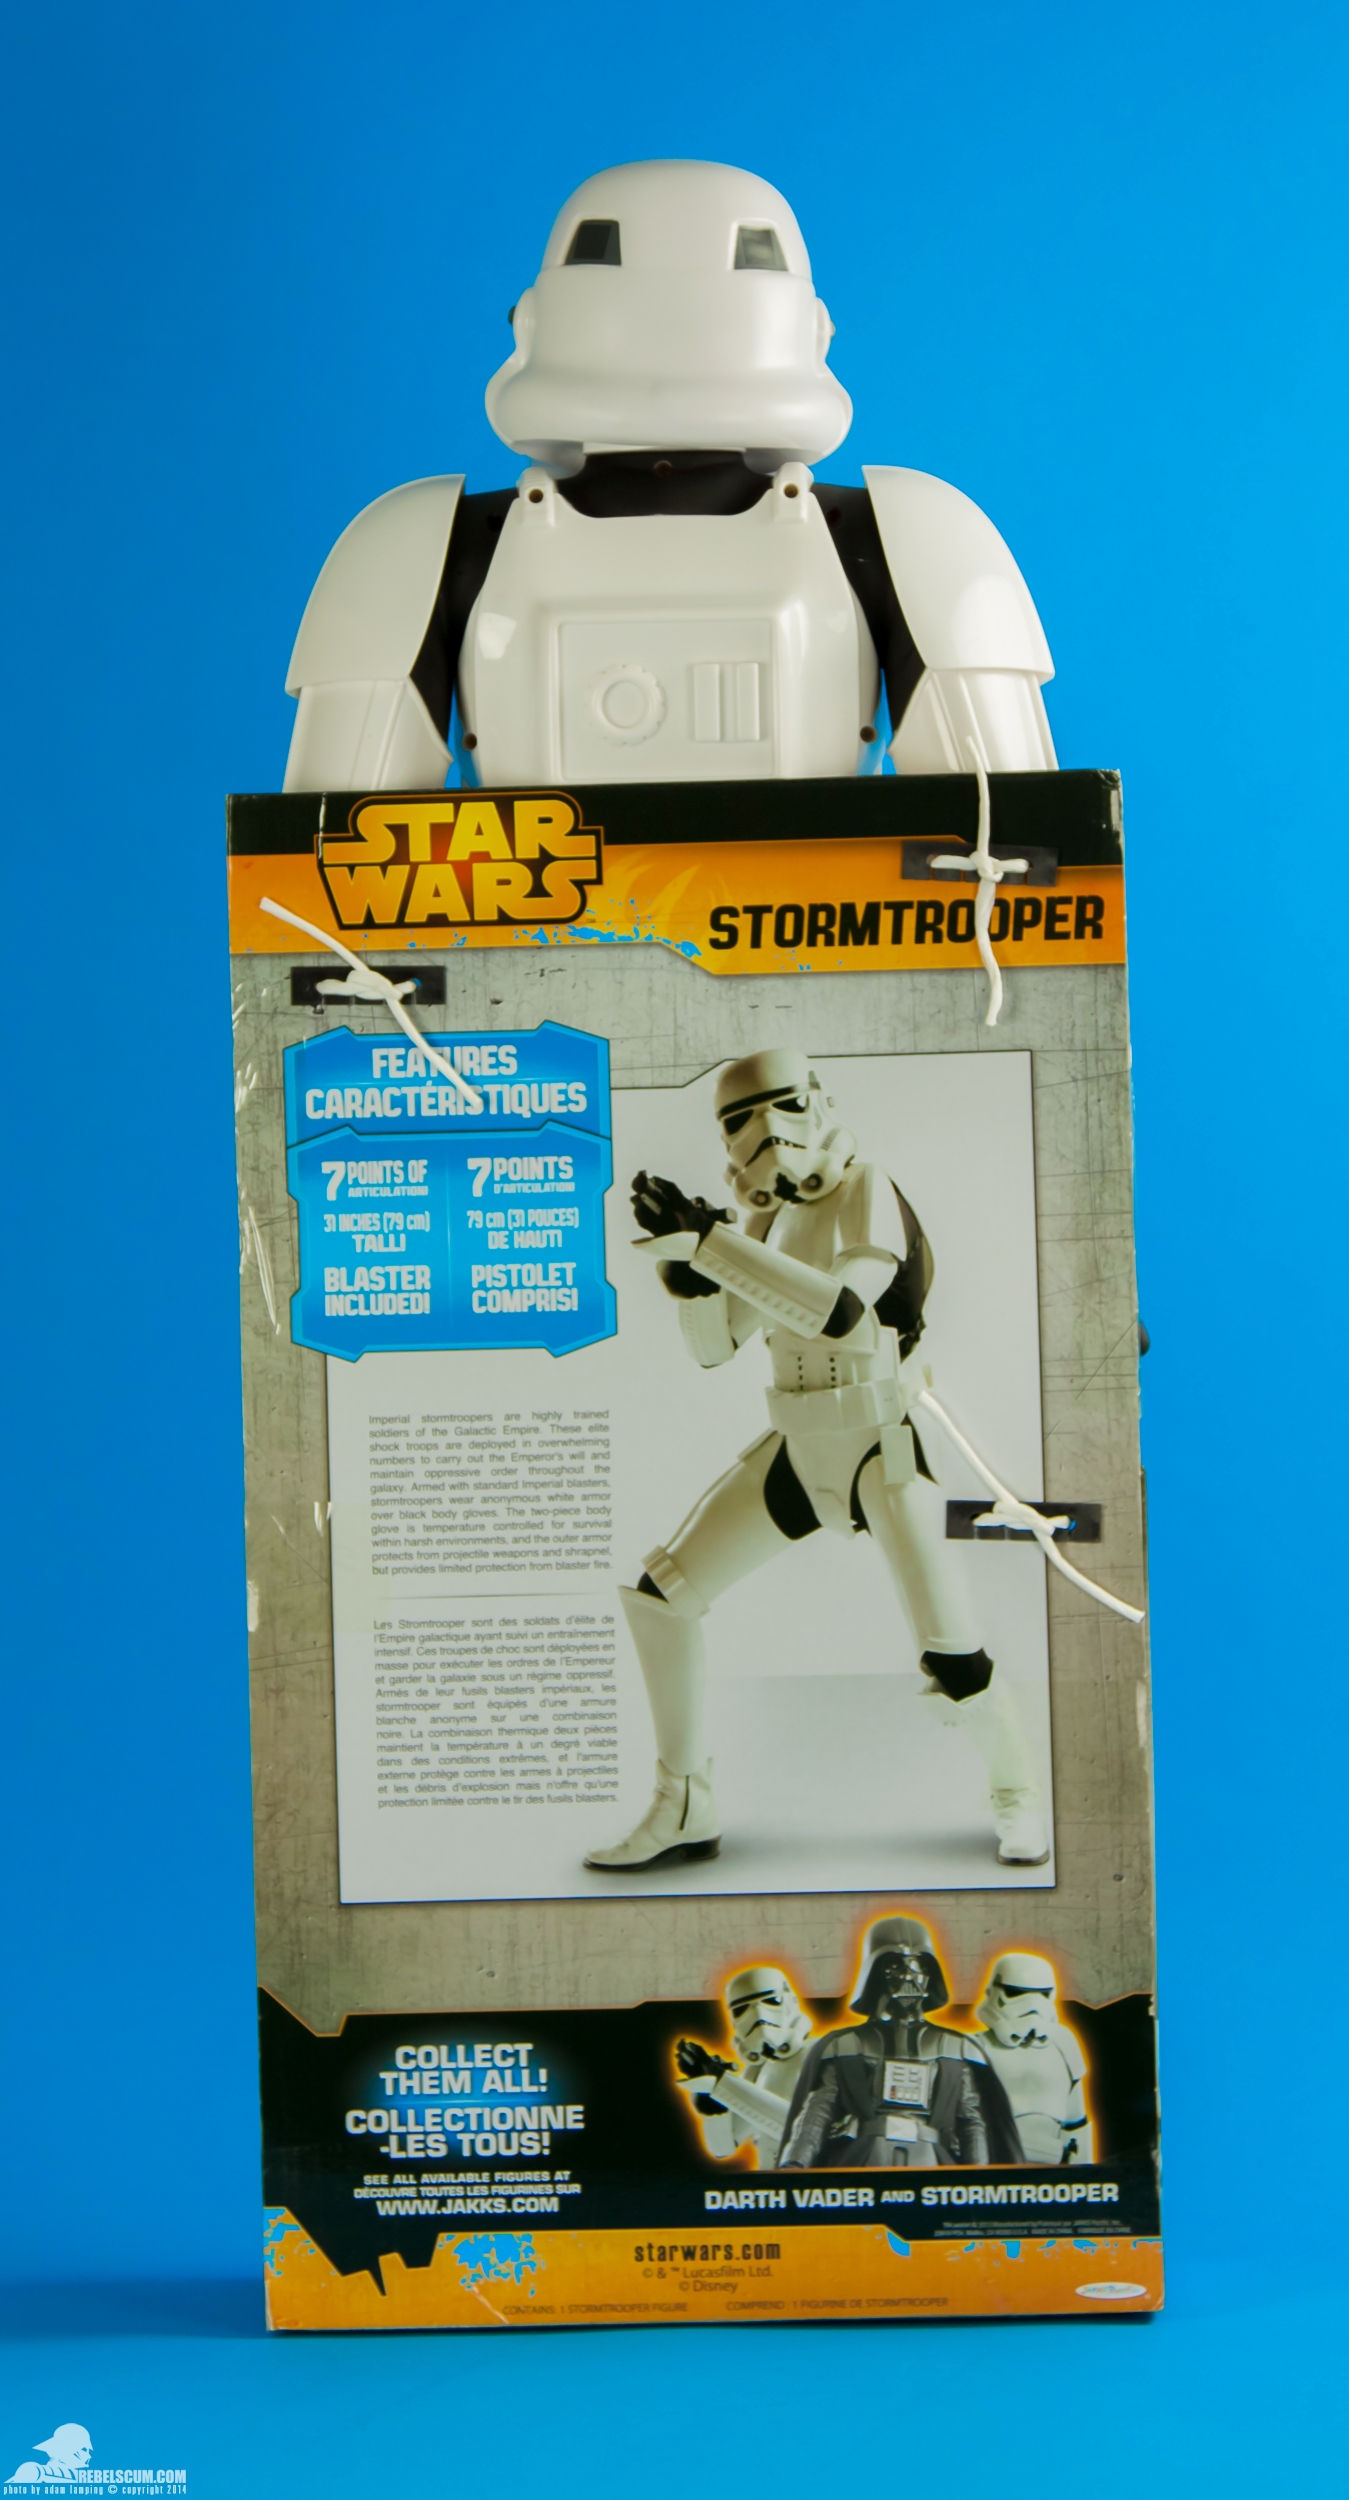 31-inch-Stormtrooper-Star-Wars-JAKKS-Pacific-013.jpg